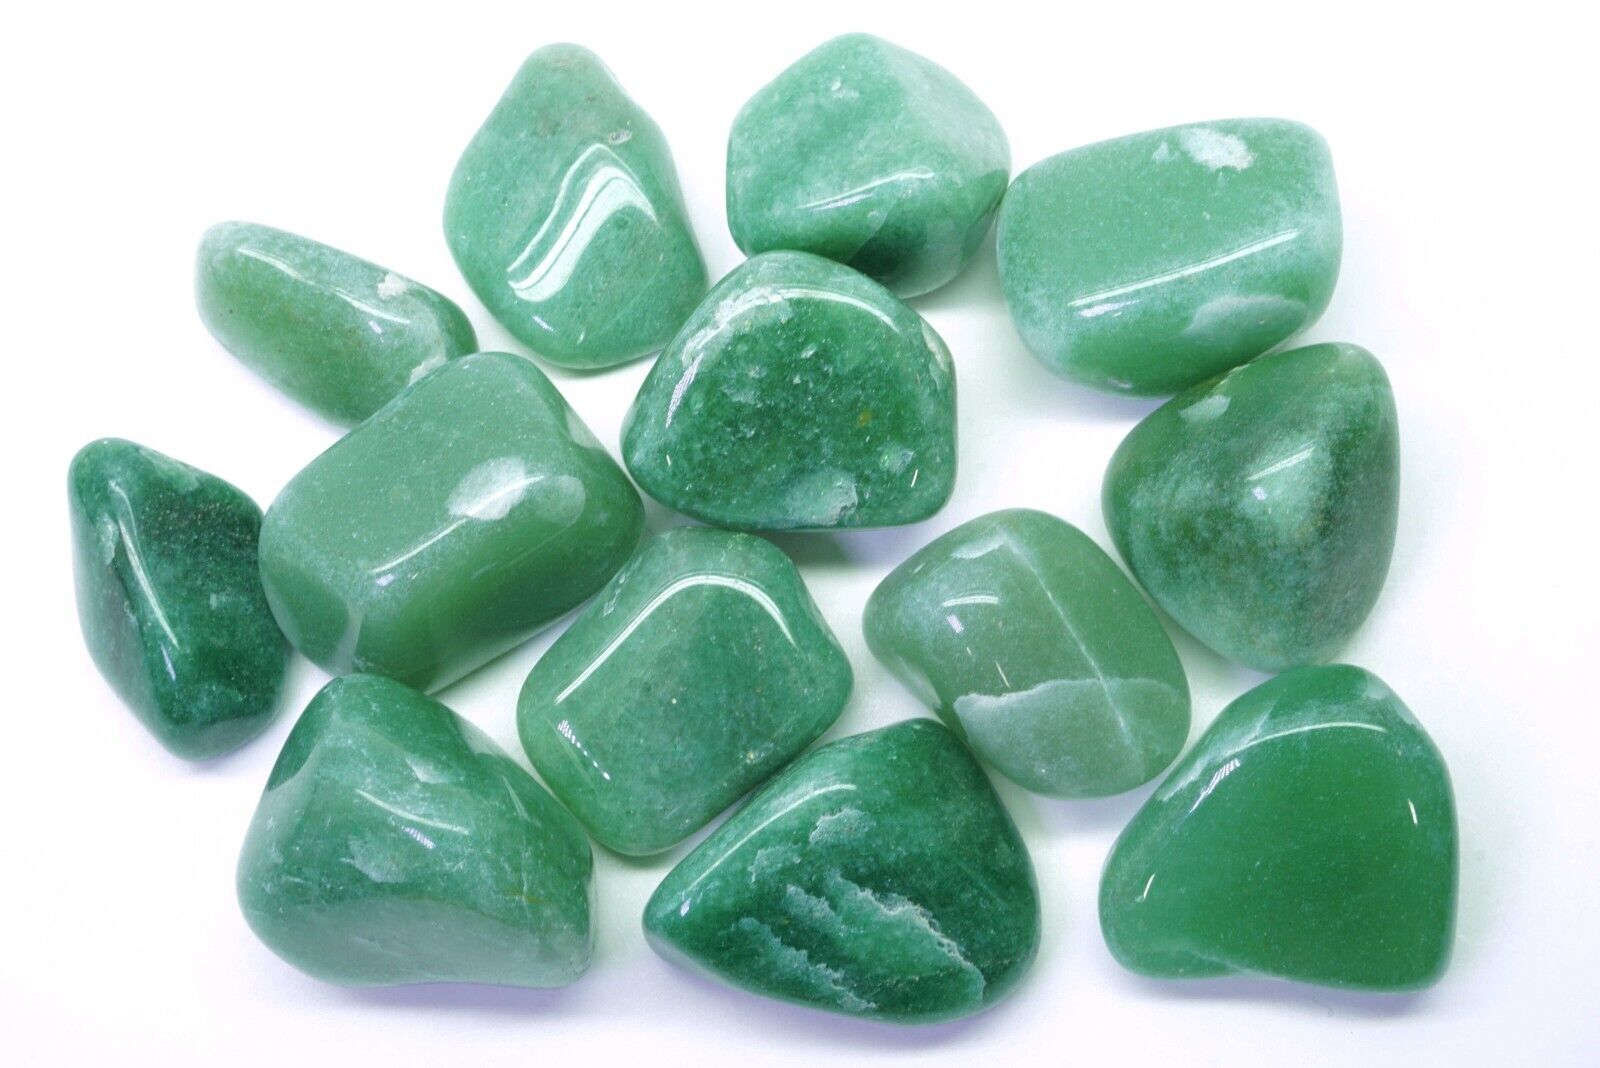 Bulk Tumbled Green Aventurine Crystals 1/2 Lb Natural Healing Stones